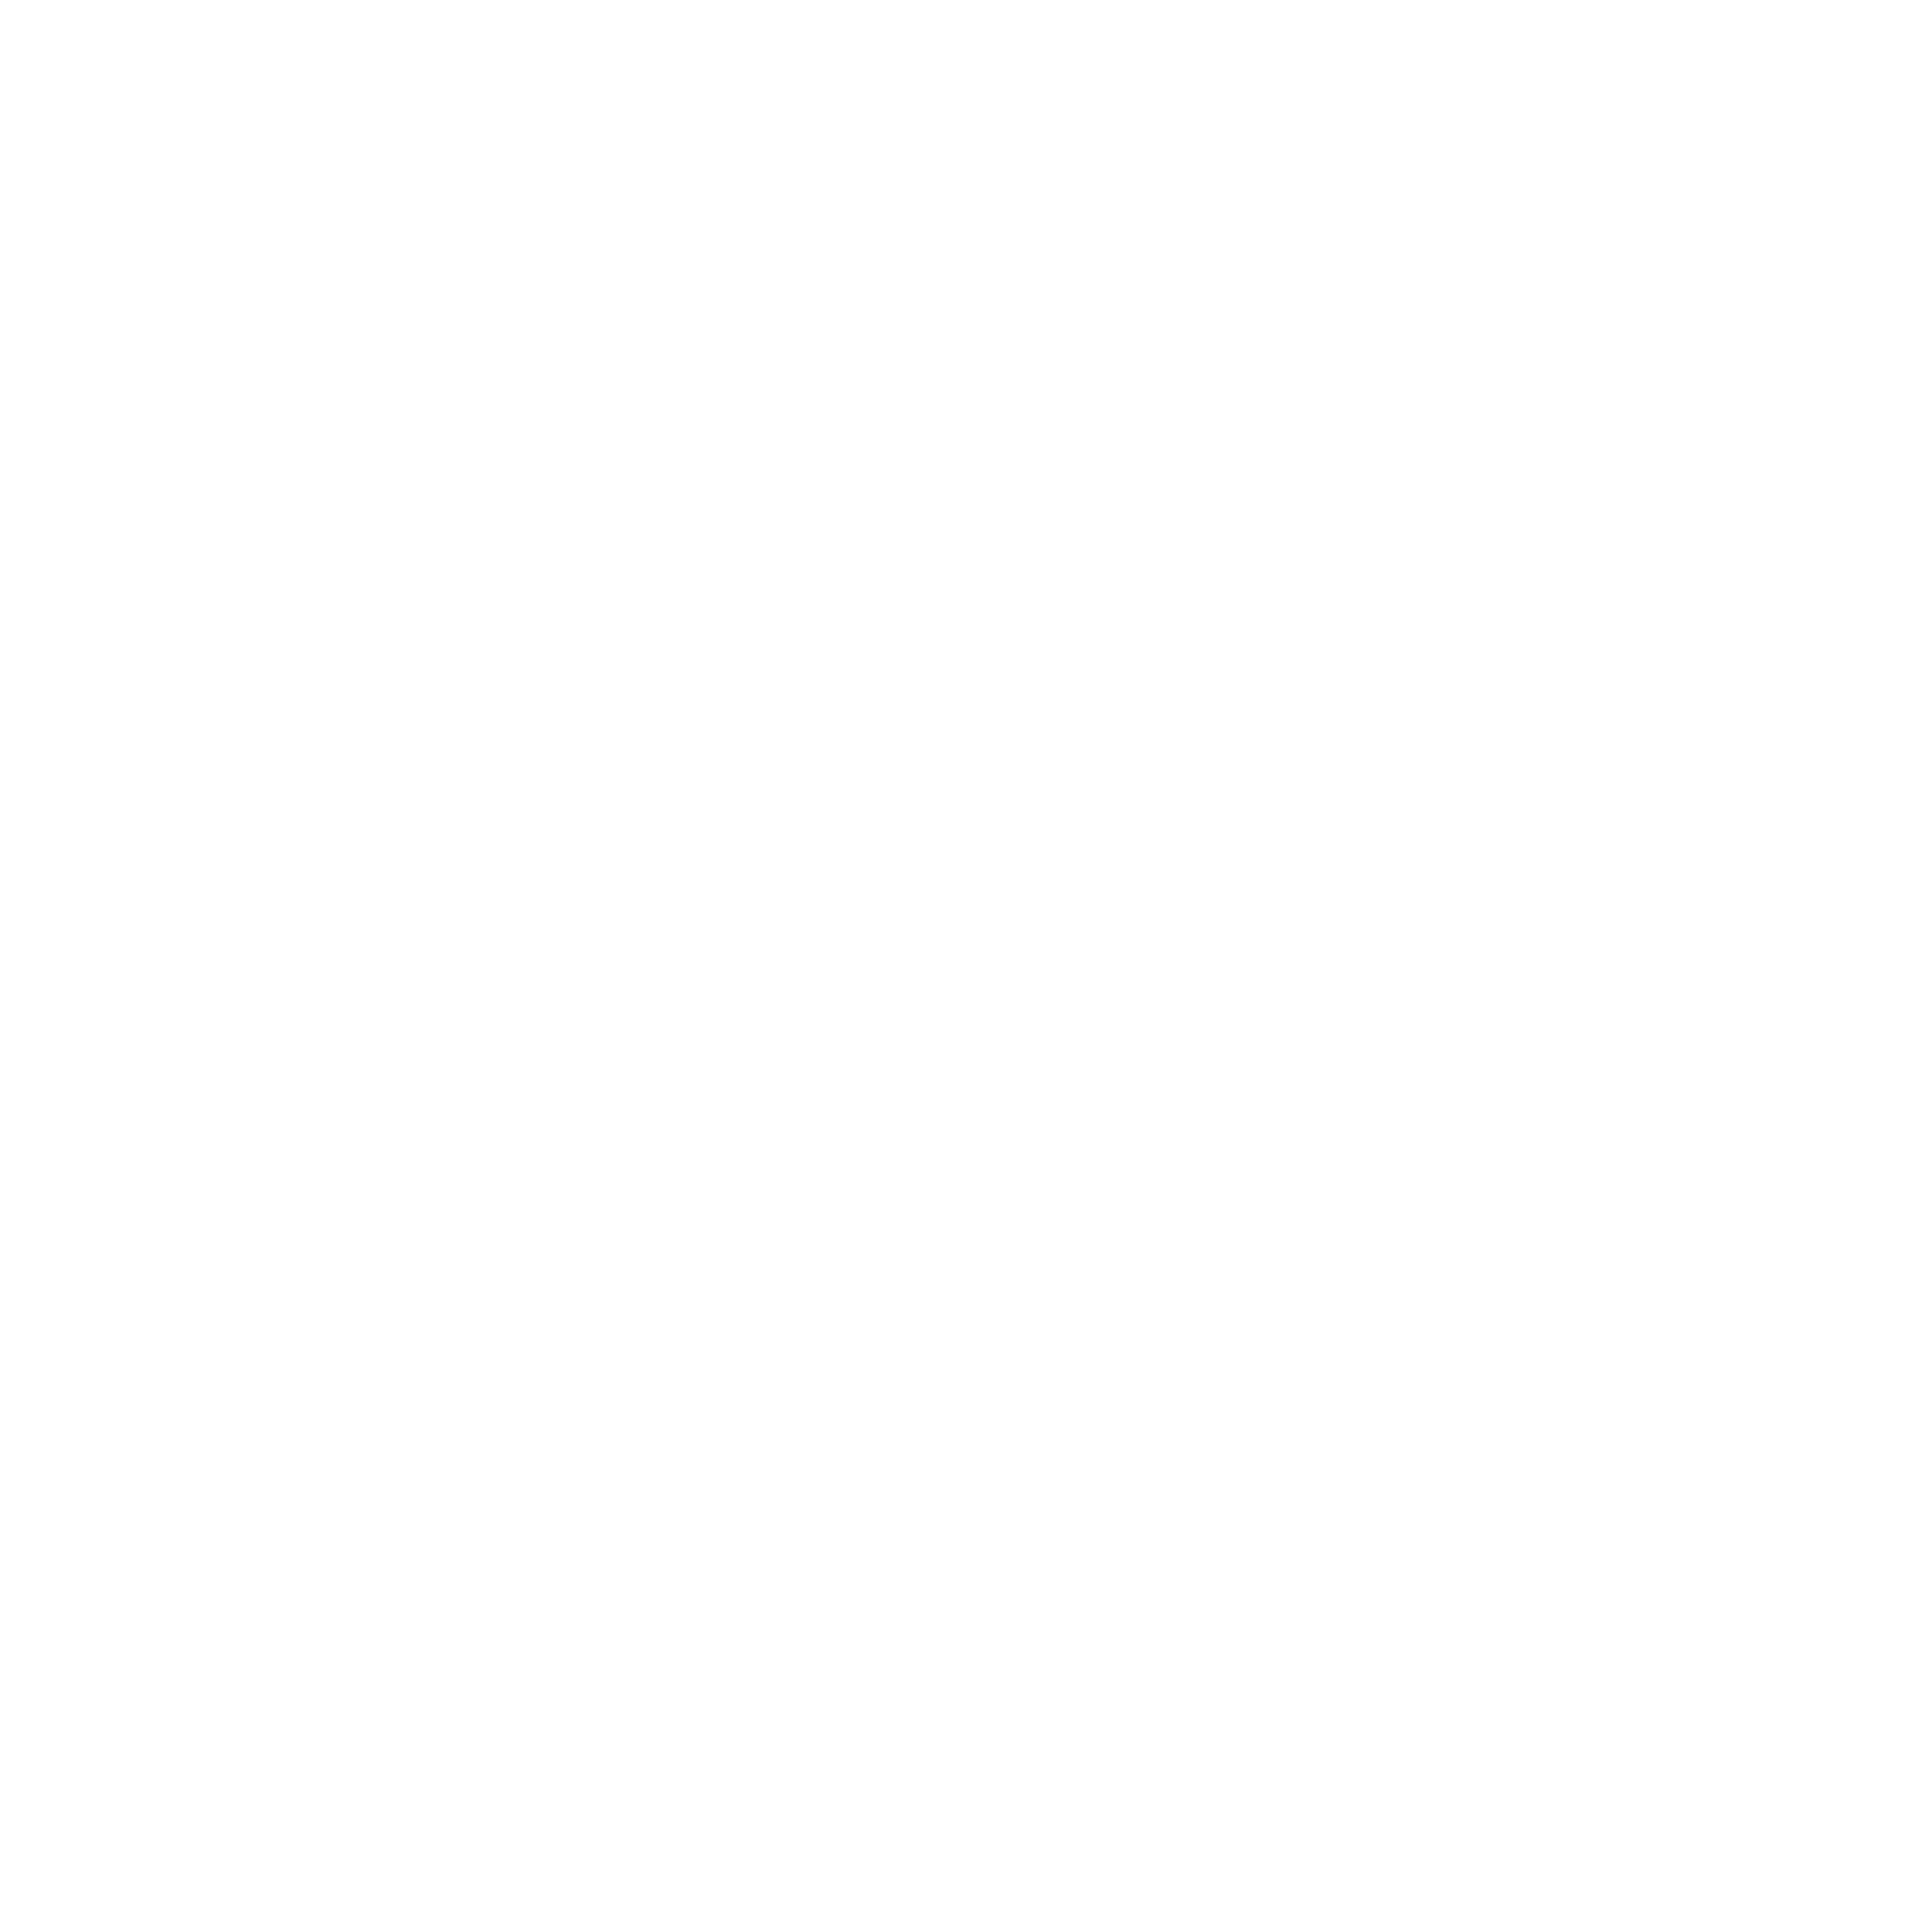 N-art Studio